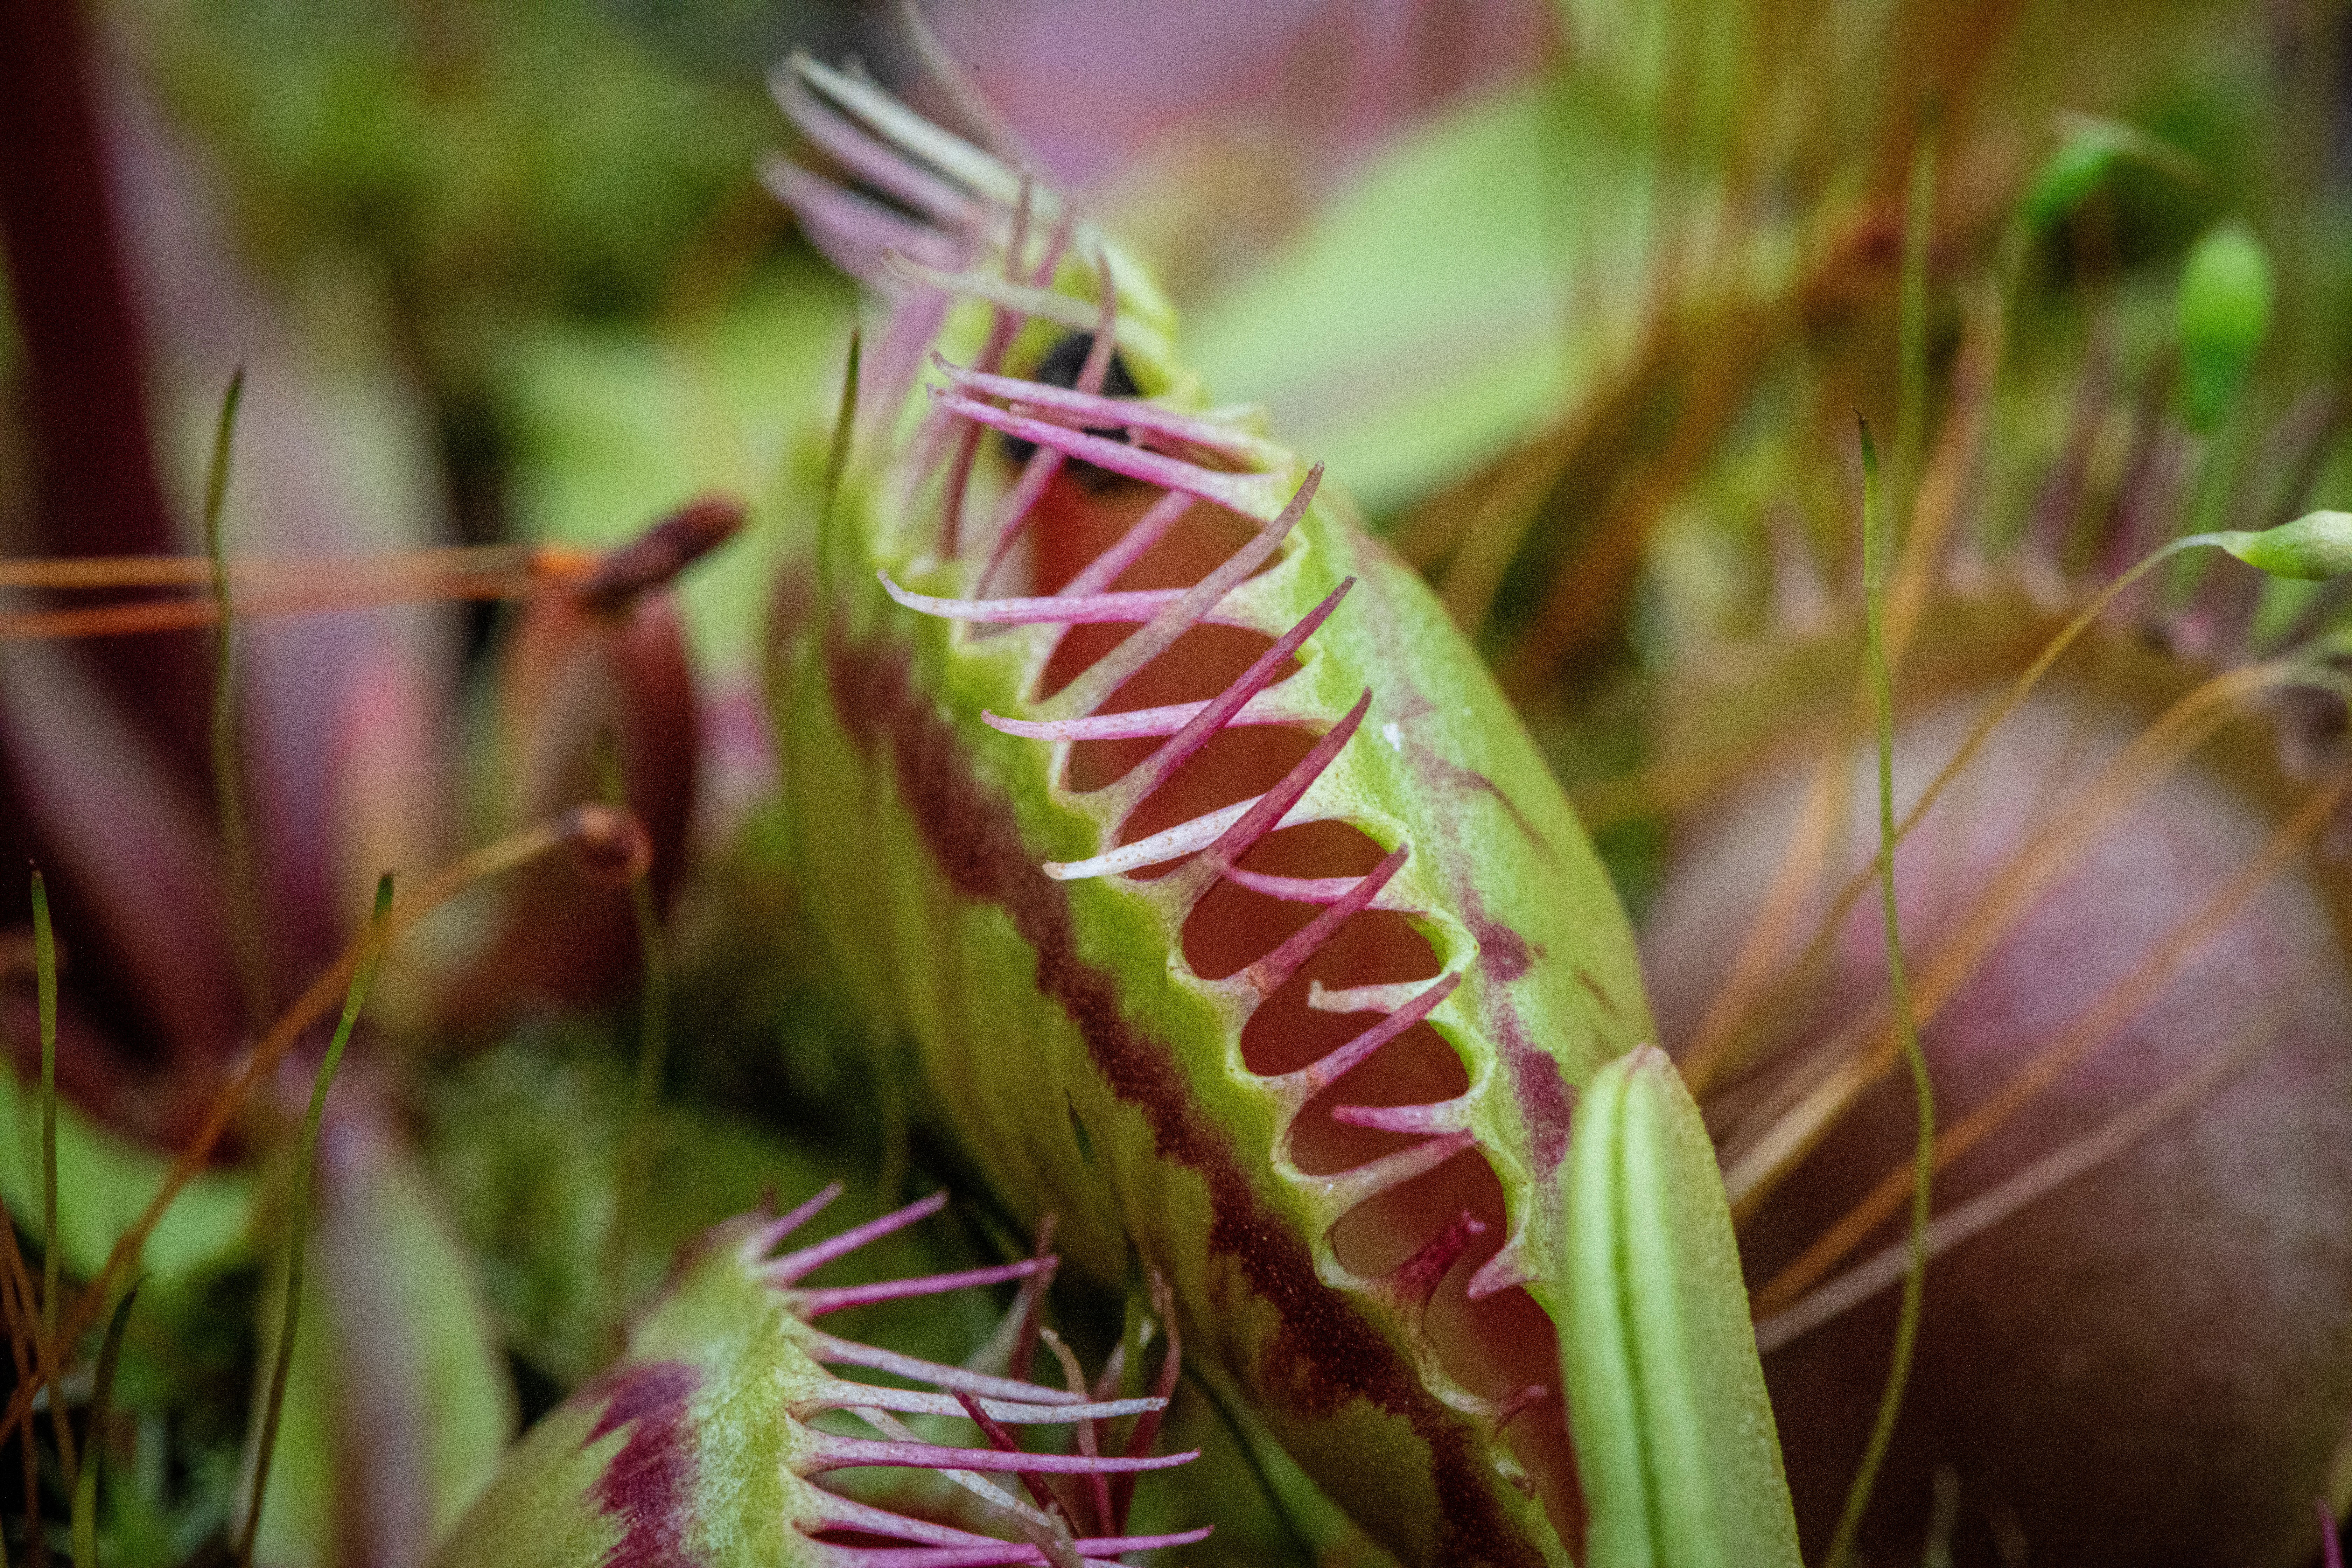 How Venus flytraps store short-term 'memories' of prey